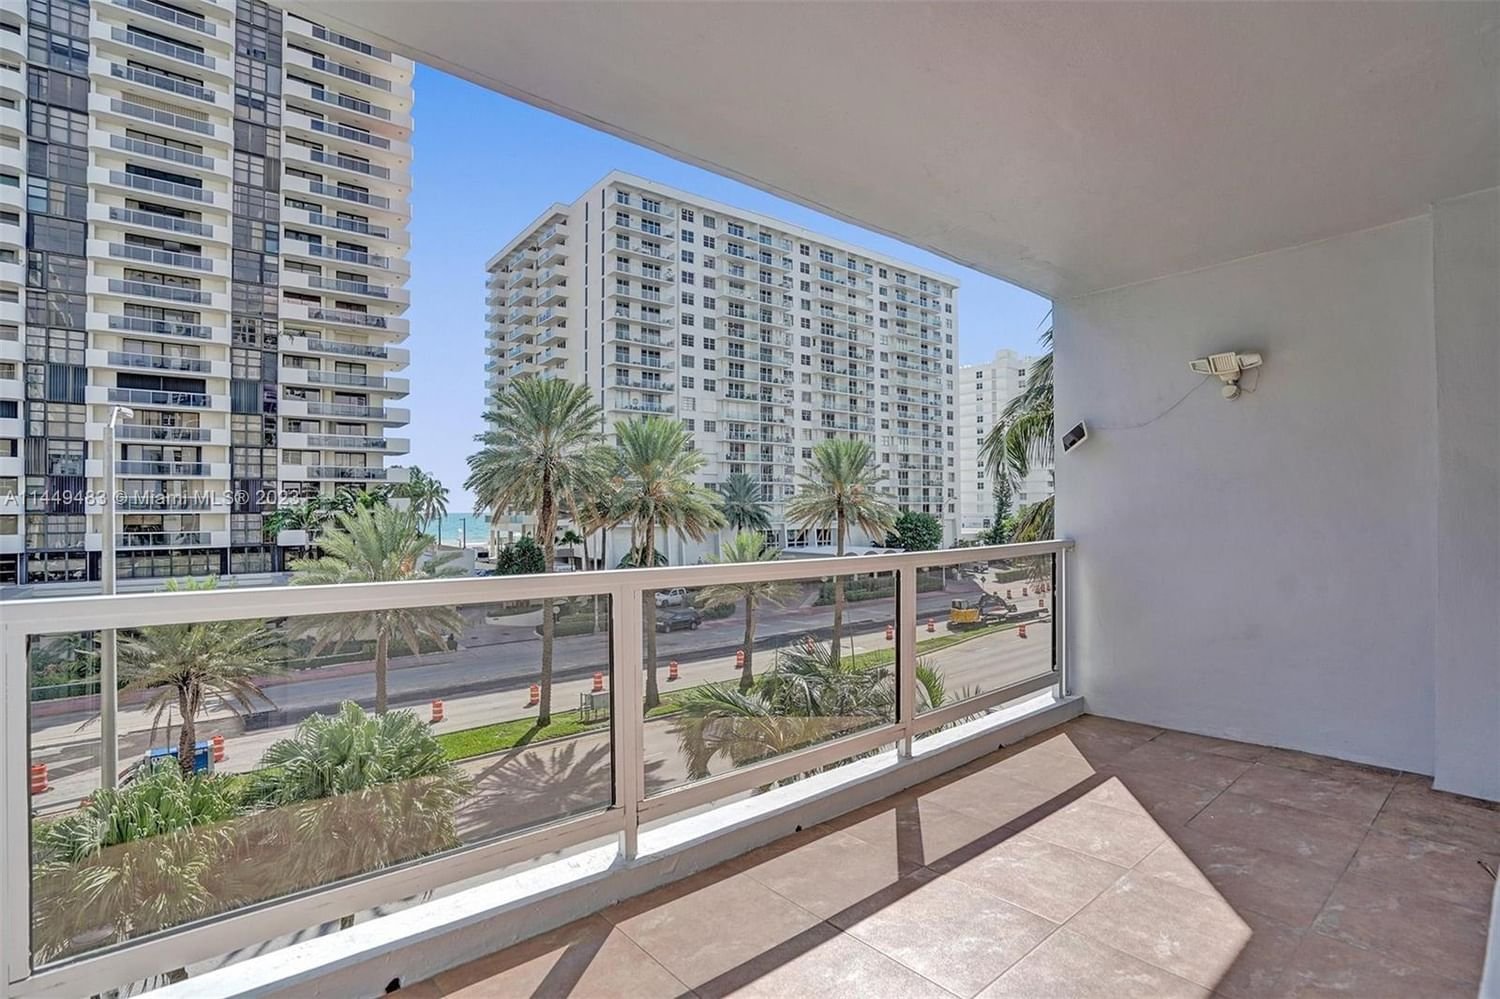 Real estate property located at 5700 Collins Ave #4M, Miami-Dade County, Miami Beach, FL